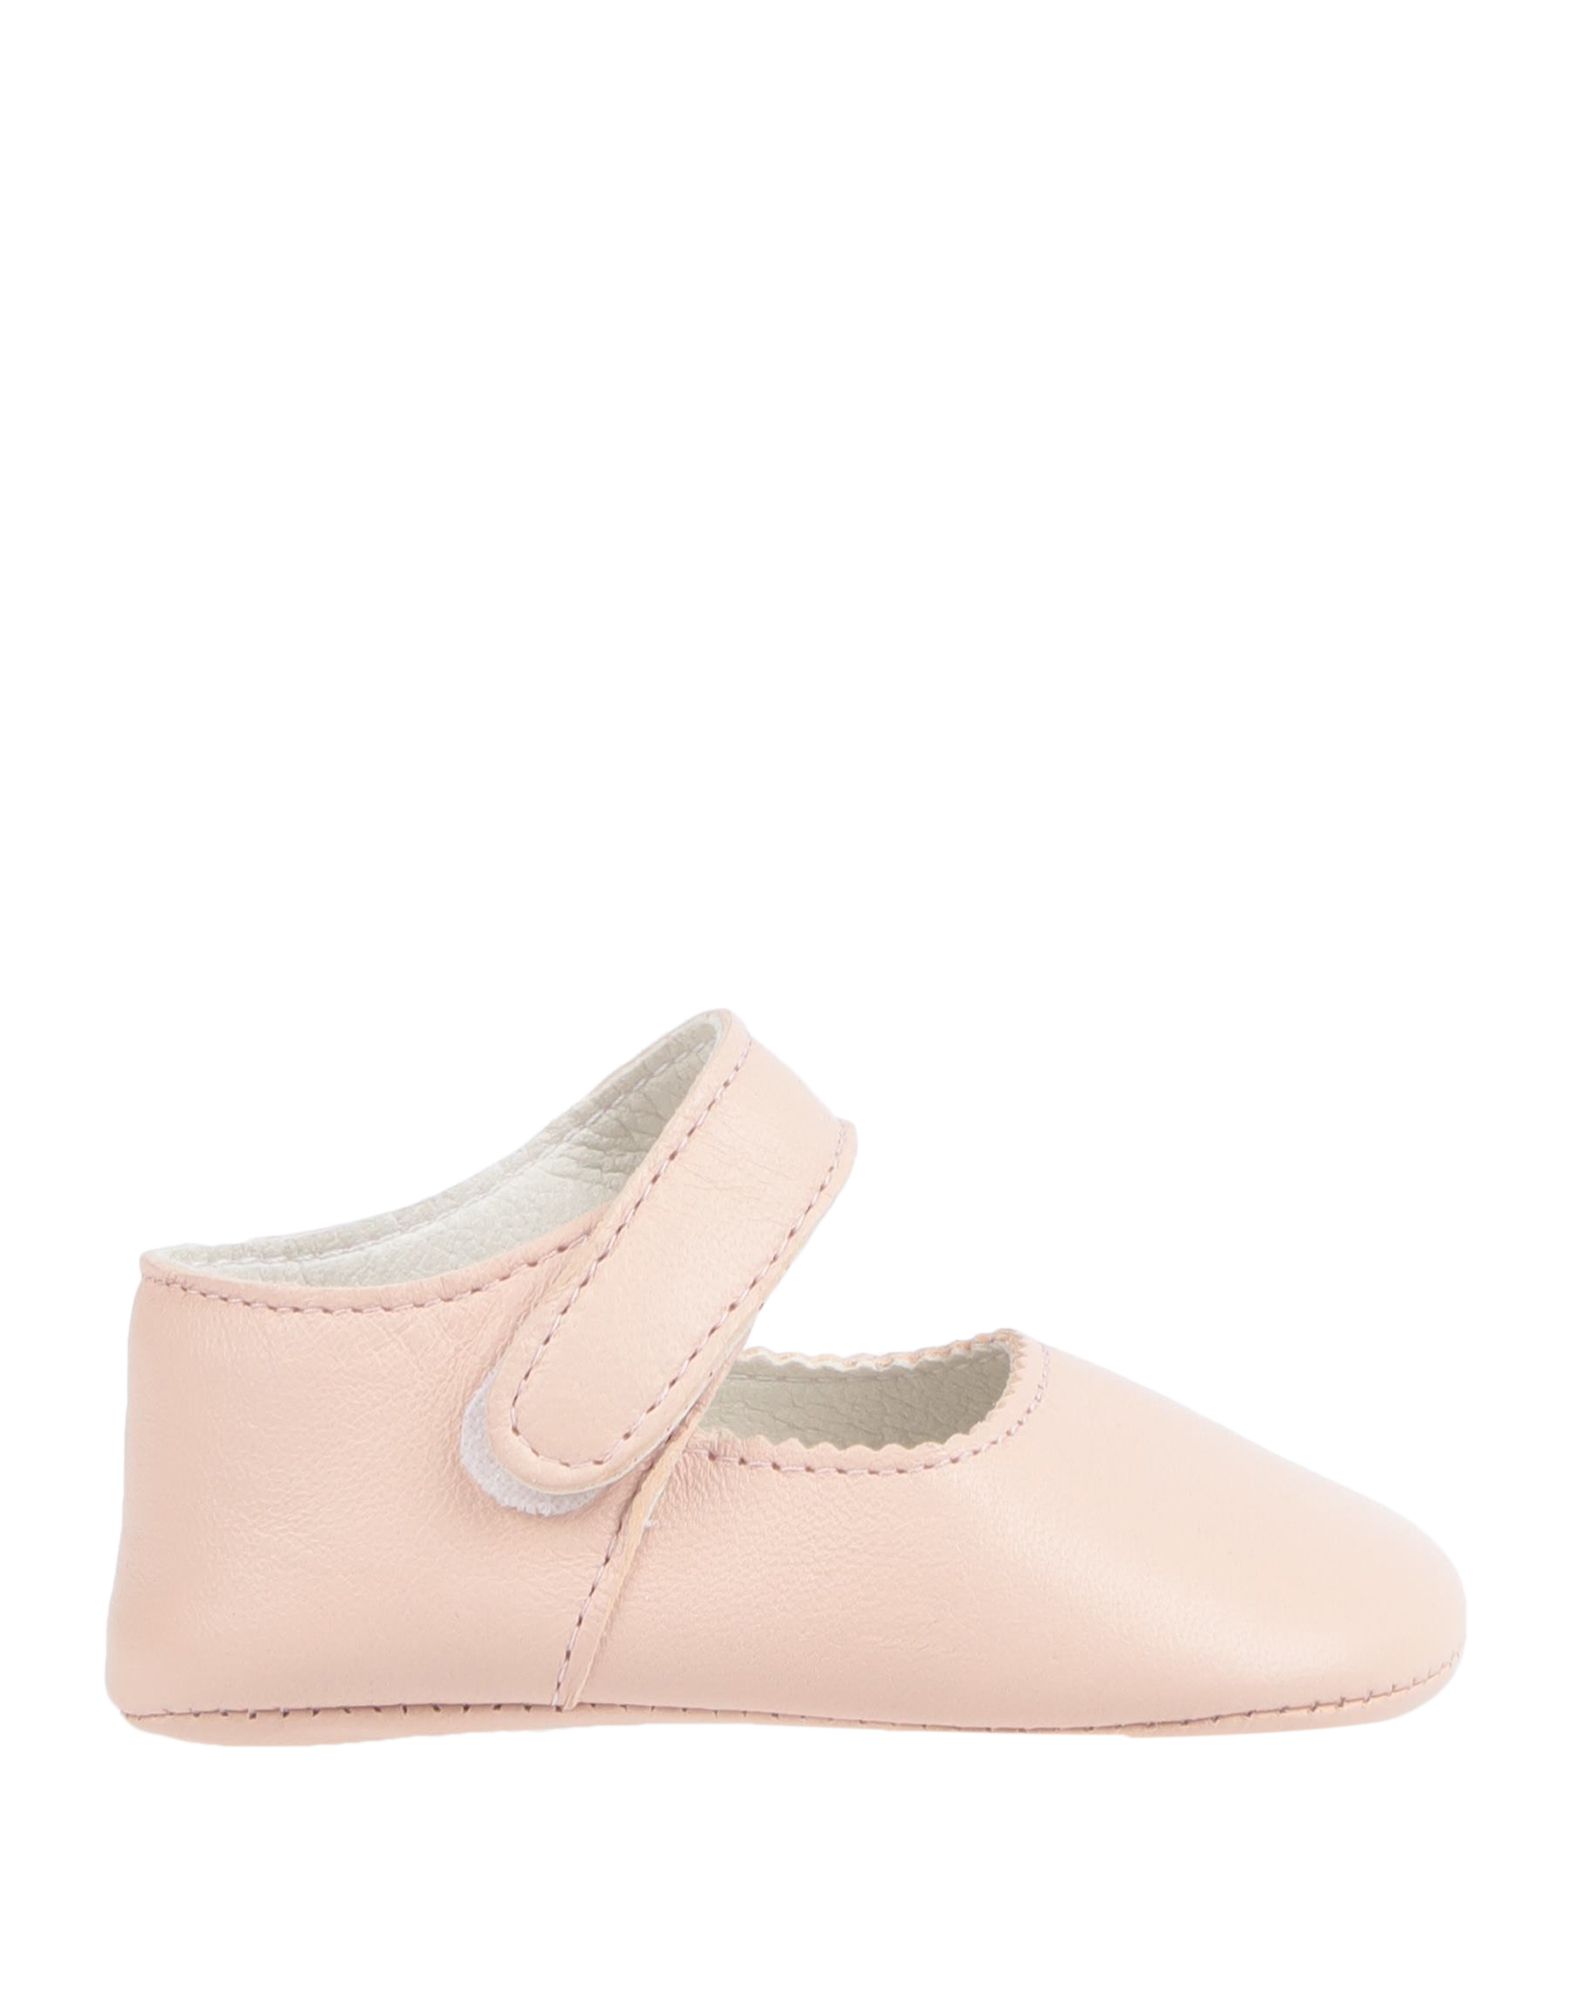 Nanán Kids' Newborn Shoes In Light Pink